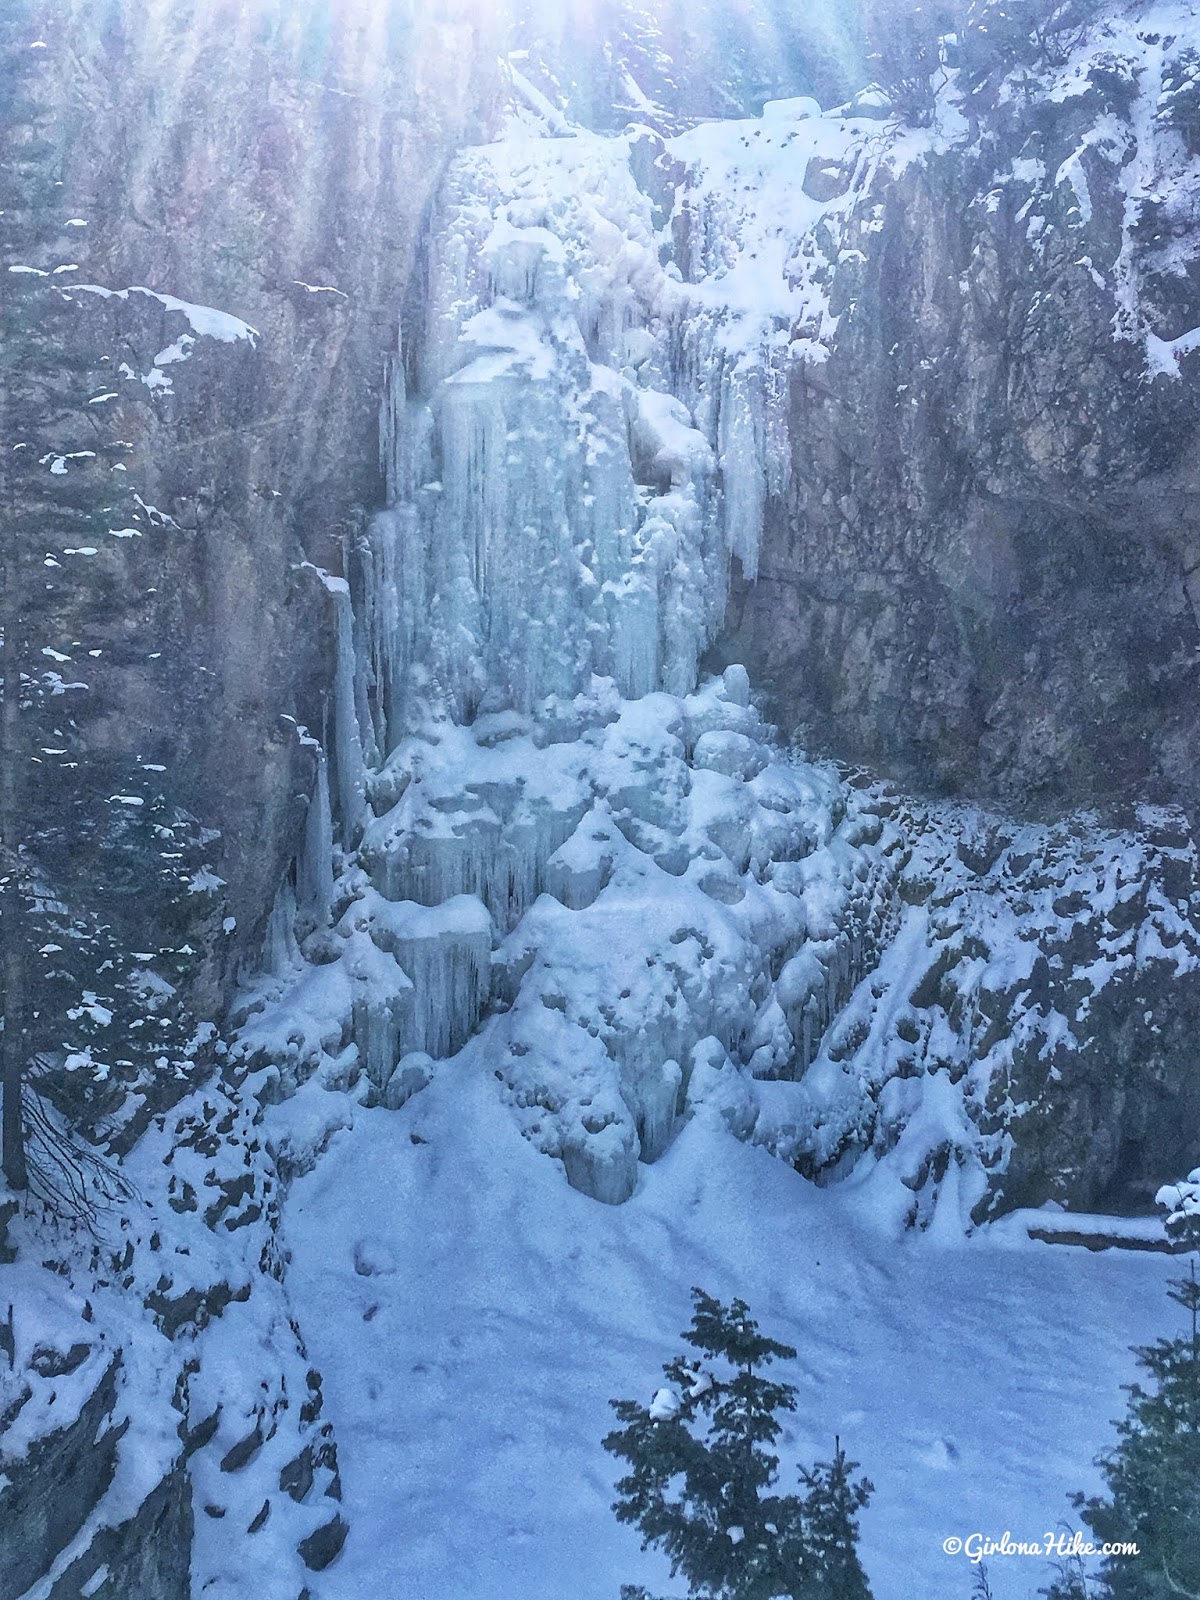 Hiking to Bouillon Falls, Utah, Waterfalls in Utah, Best waterfalls in utah